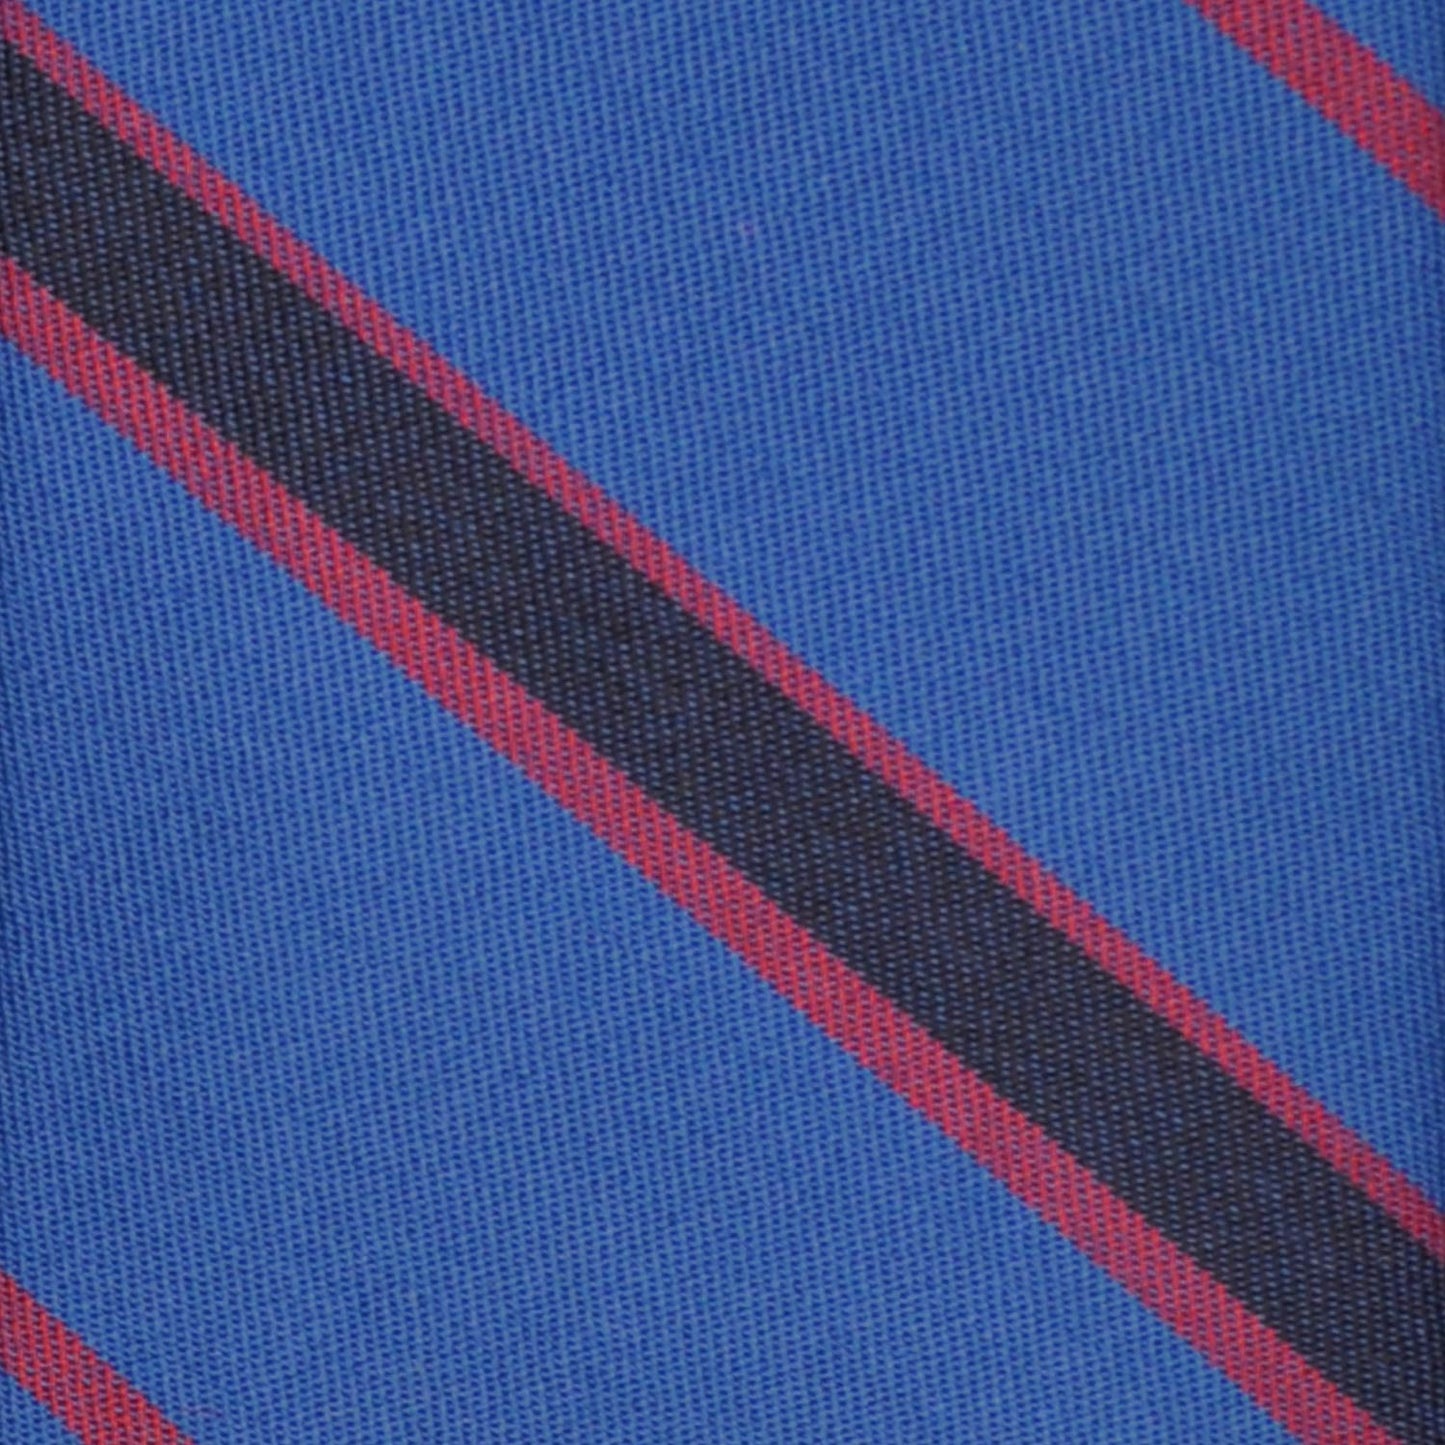 F.Marino Wool Tie 3 Folds Regimental Striped Sky Blue-Wools Boutique Uomo